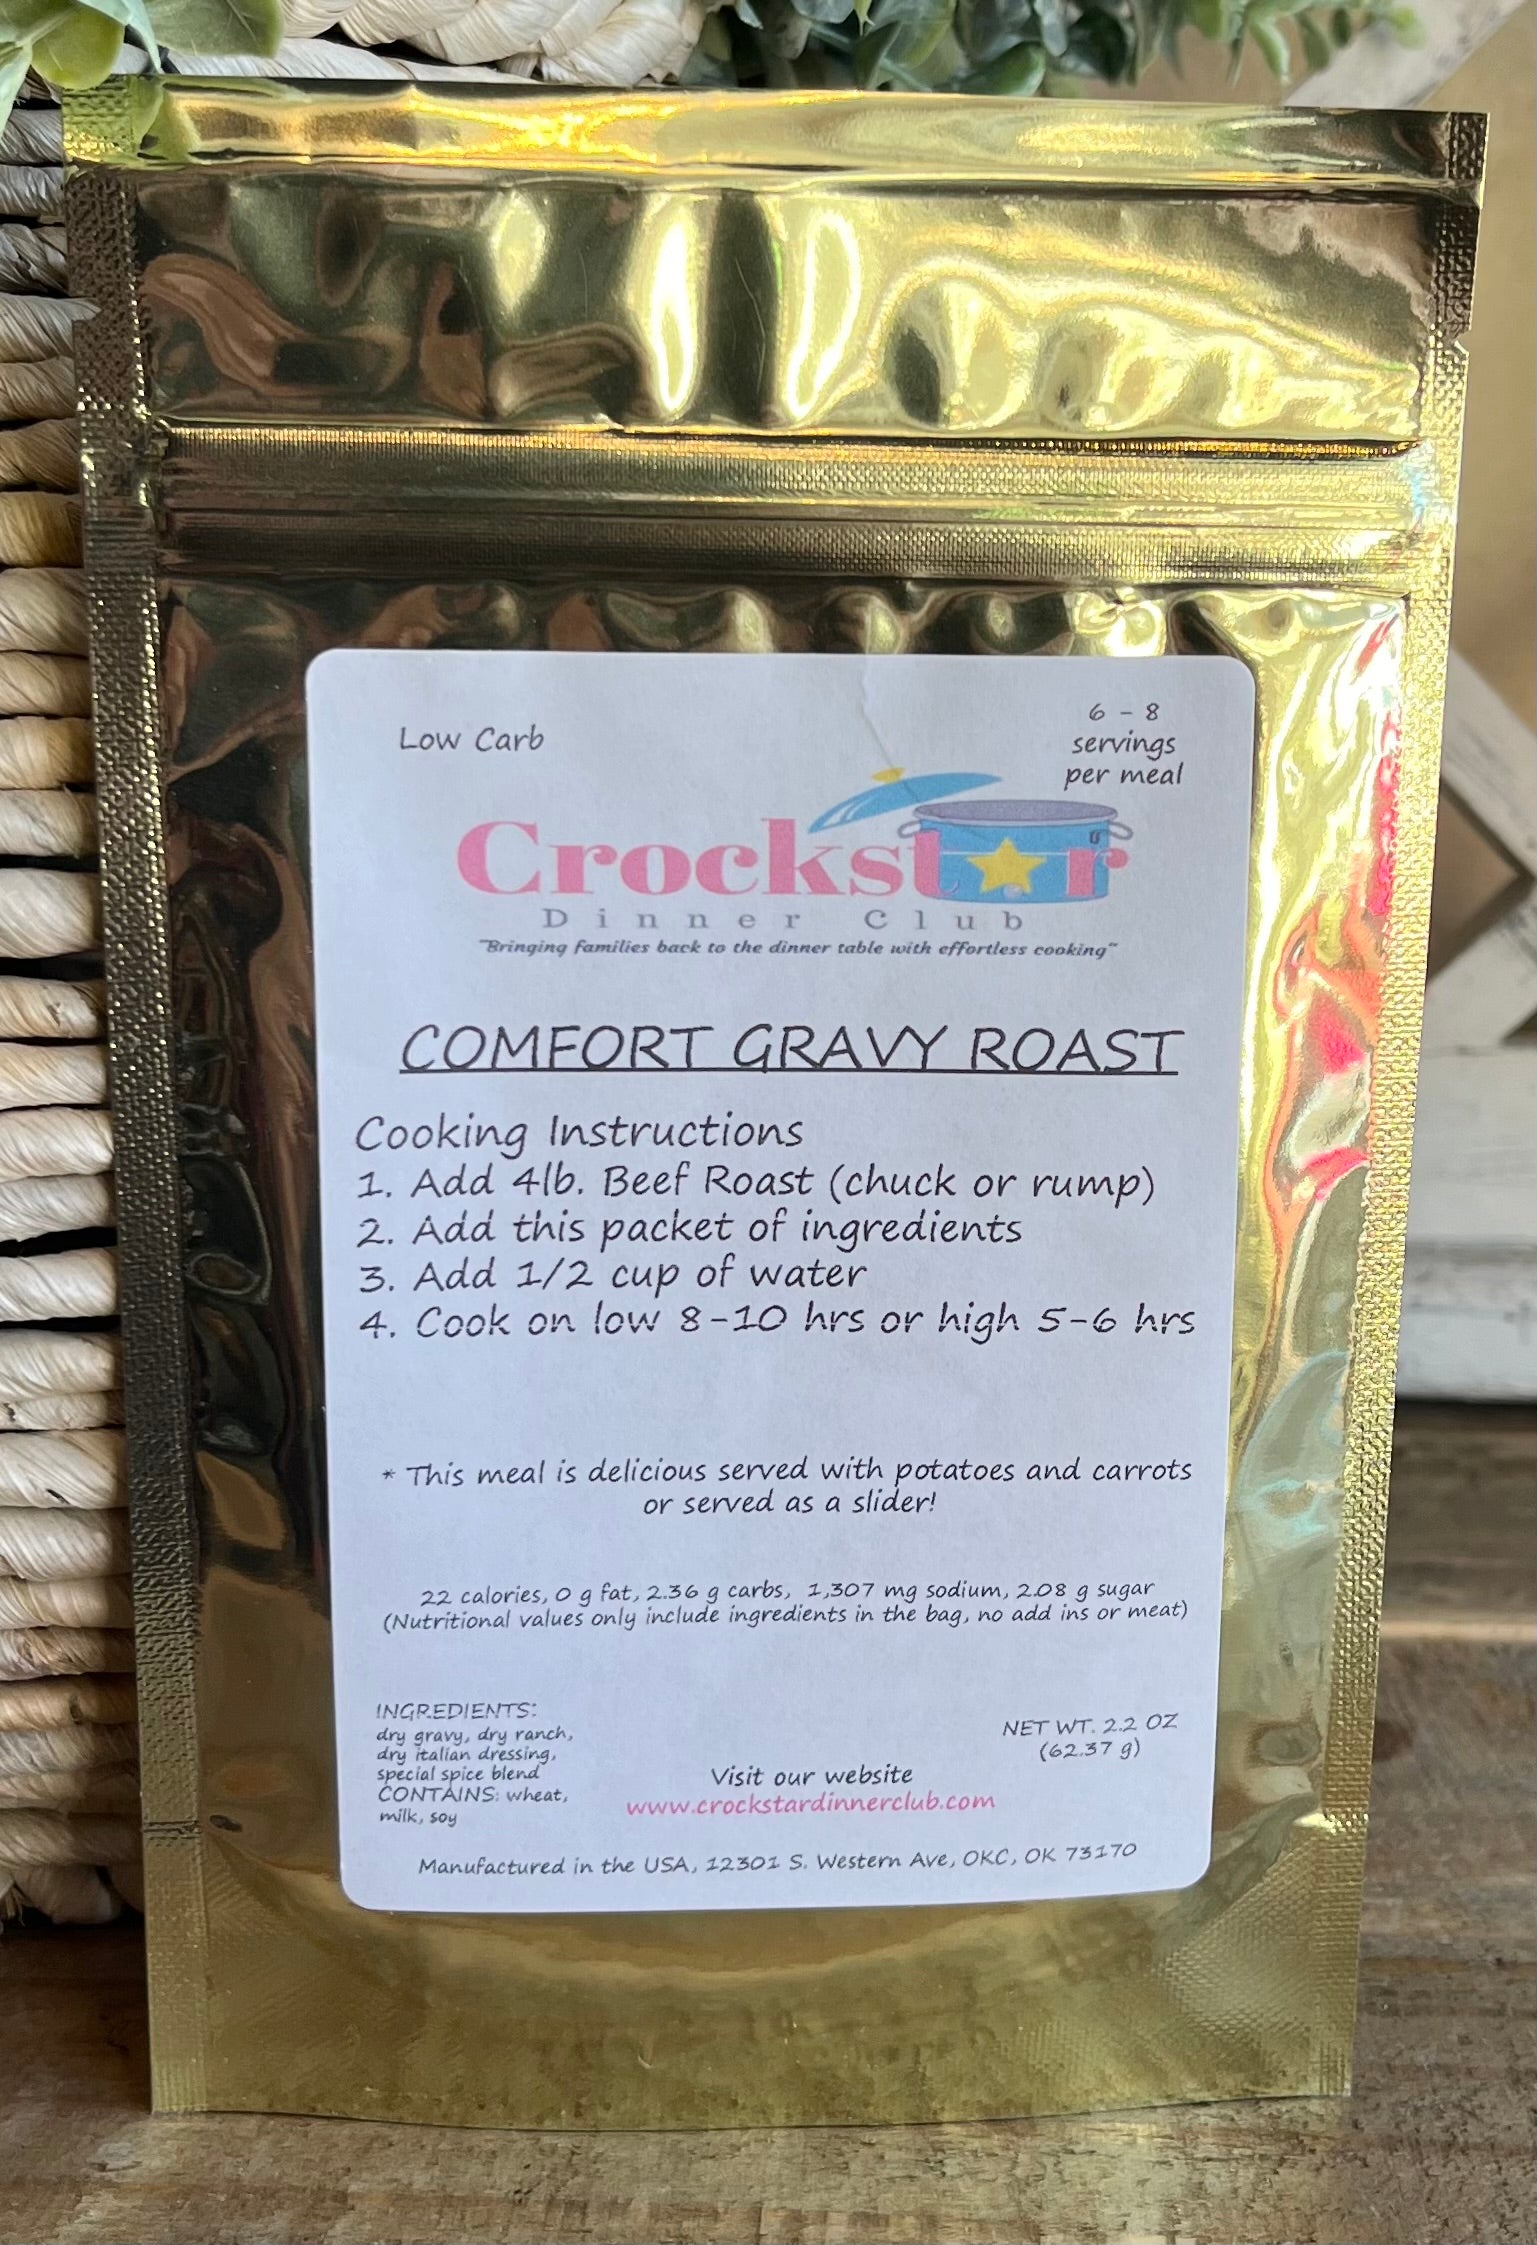 Crockstar Dinner Club - Comfort Gravy Roast